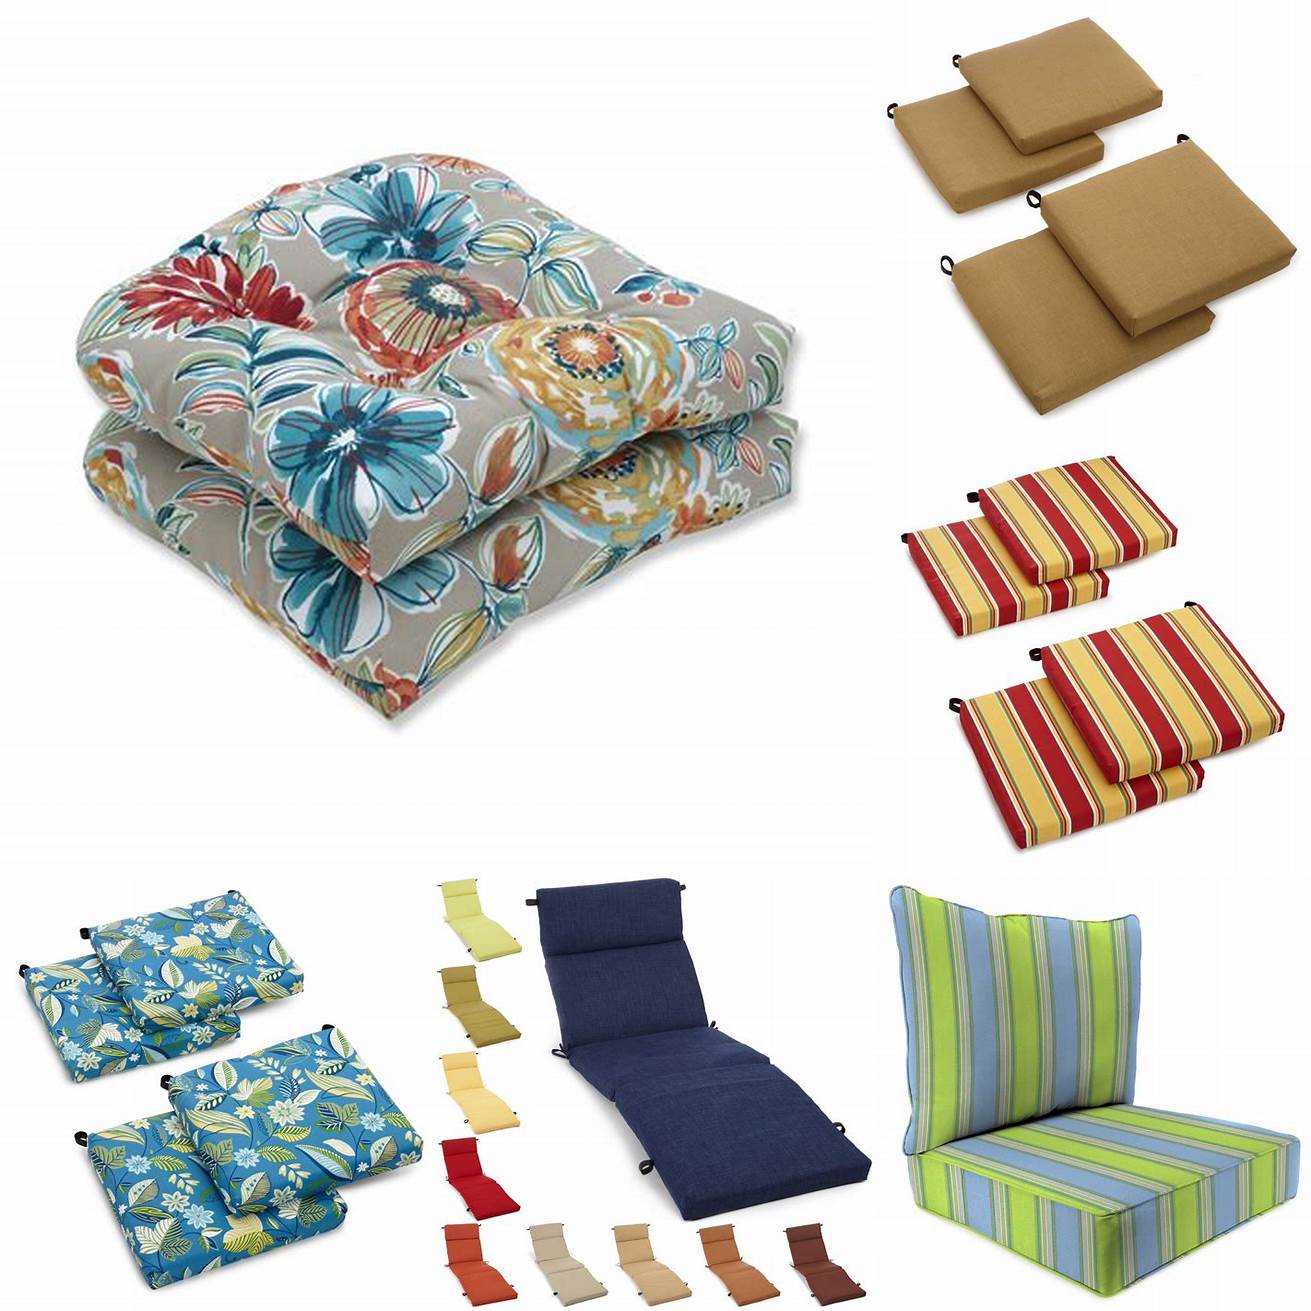 UV-Resistant Cushions